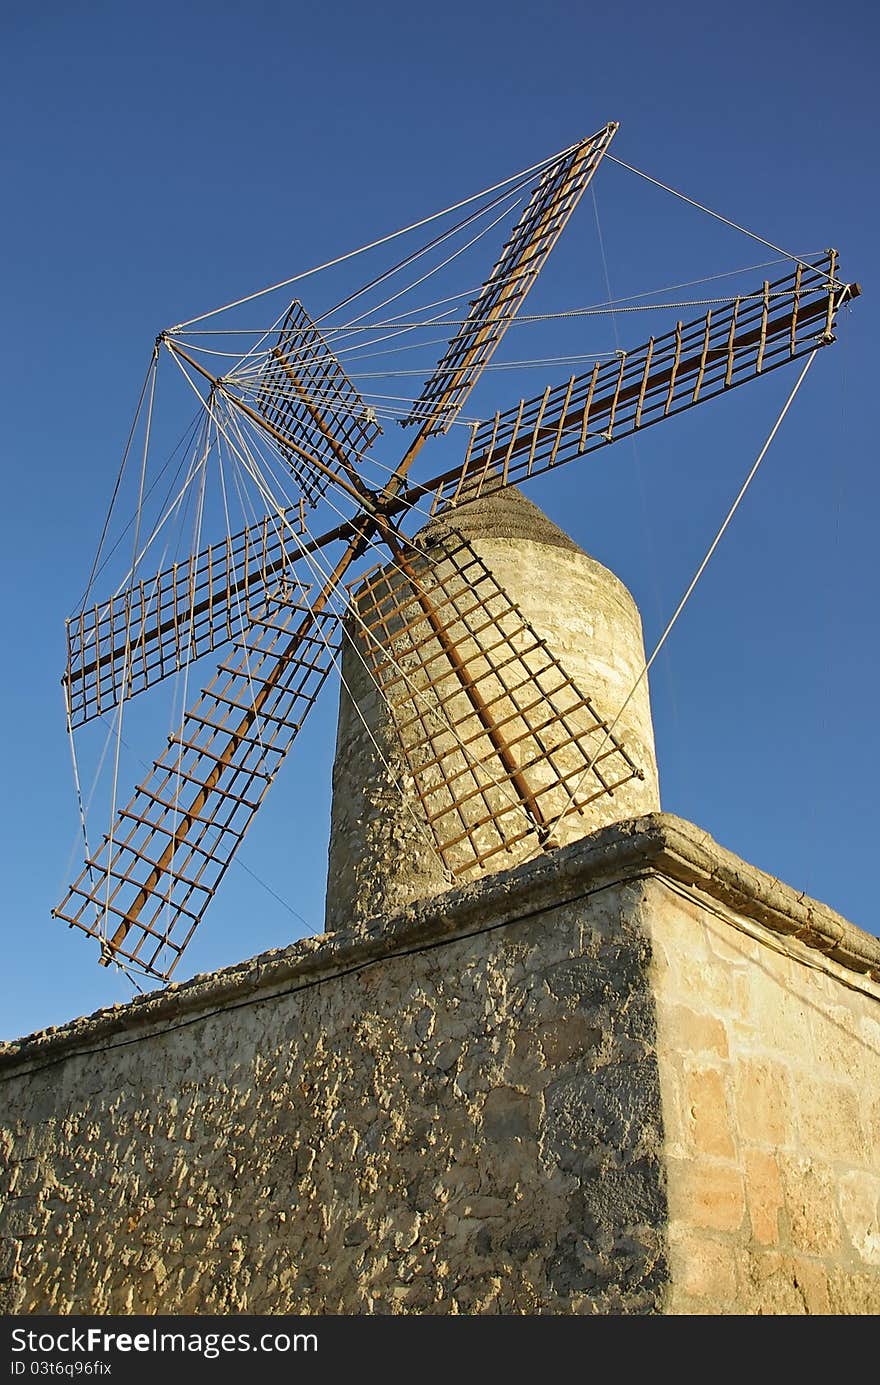 Typical spanish windmill in Manacor (Majorca - Spain)